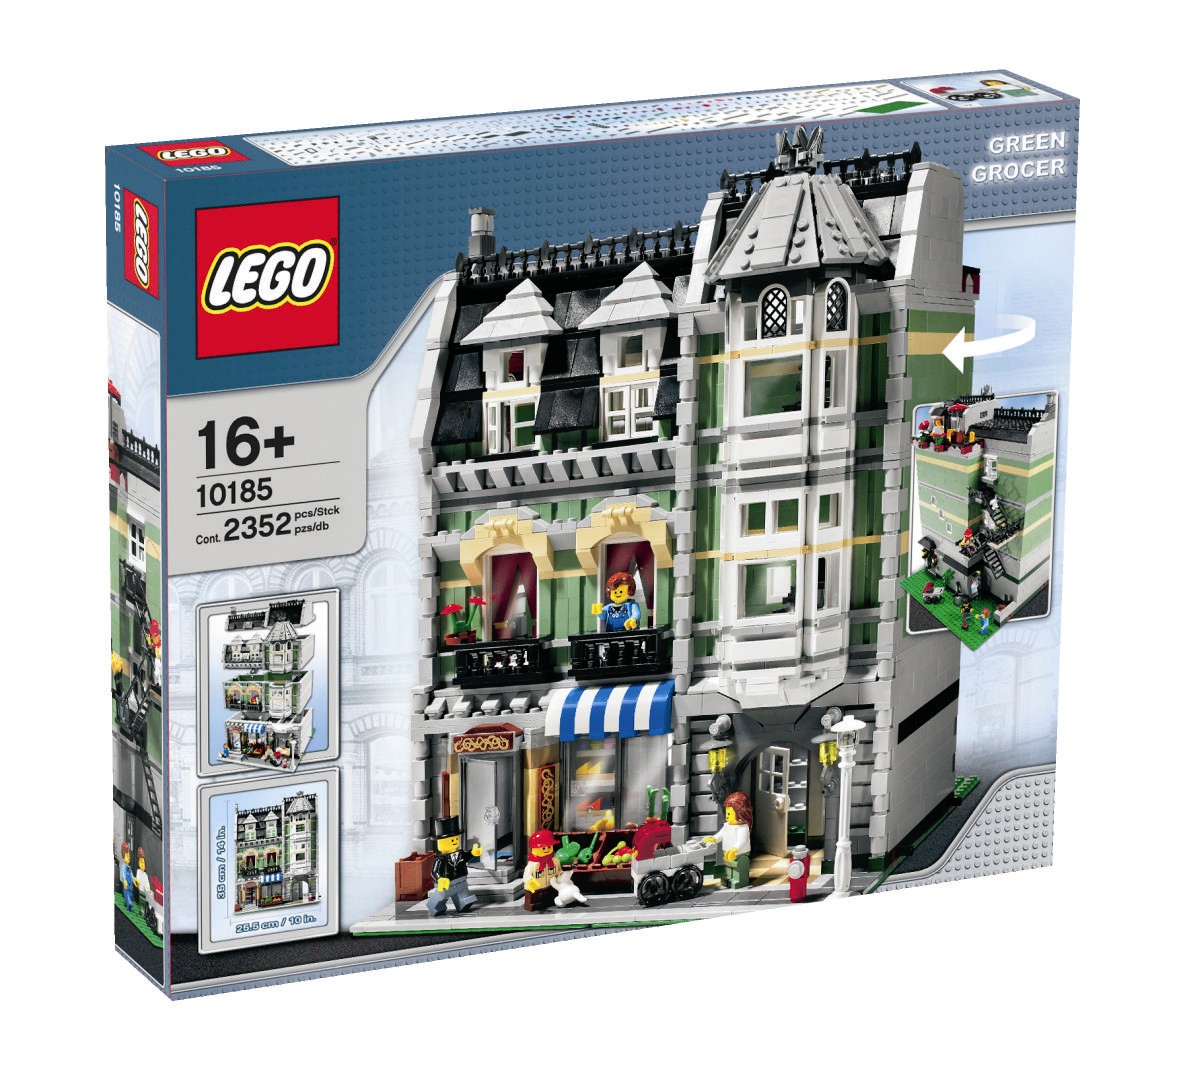 10185 Green Grocer Brickipedia The Lego Wiki